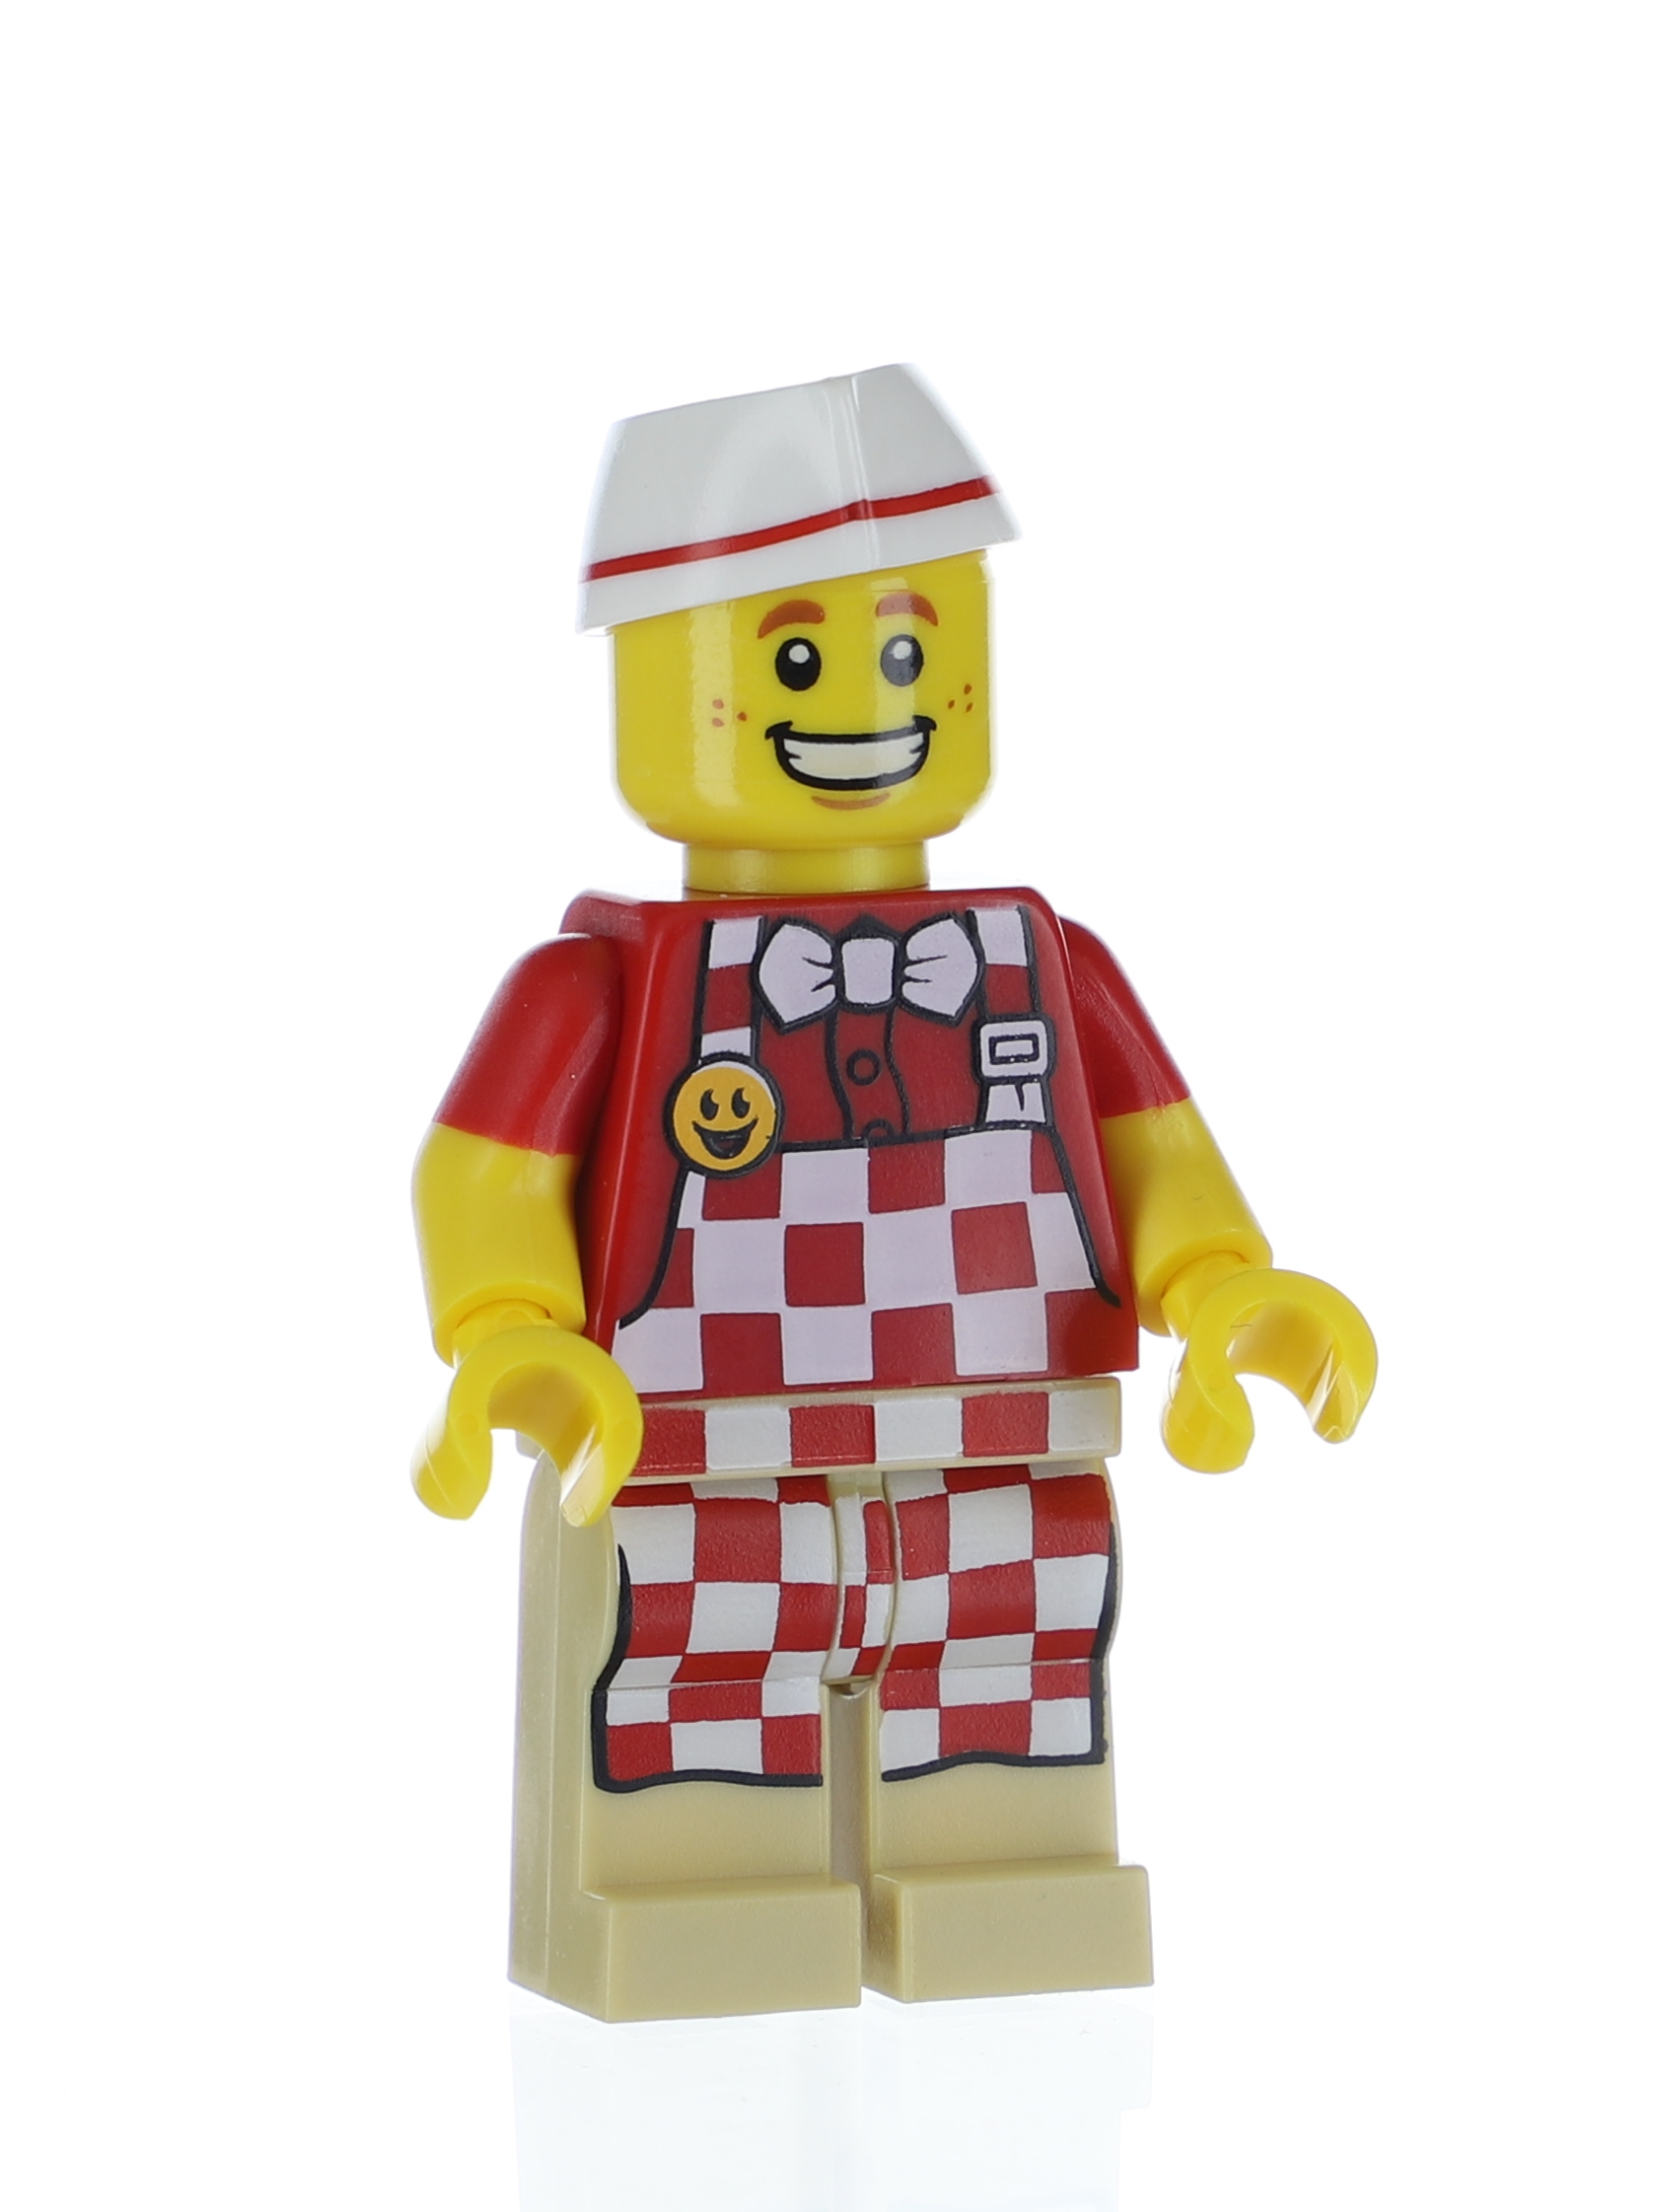 Hot Dog Man Mini Figures NEW UK Seller Fits Major Brand Blocks Bricks Hotdog 